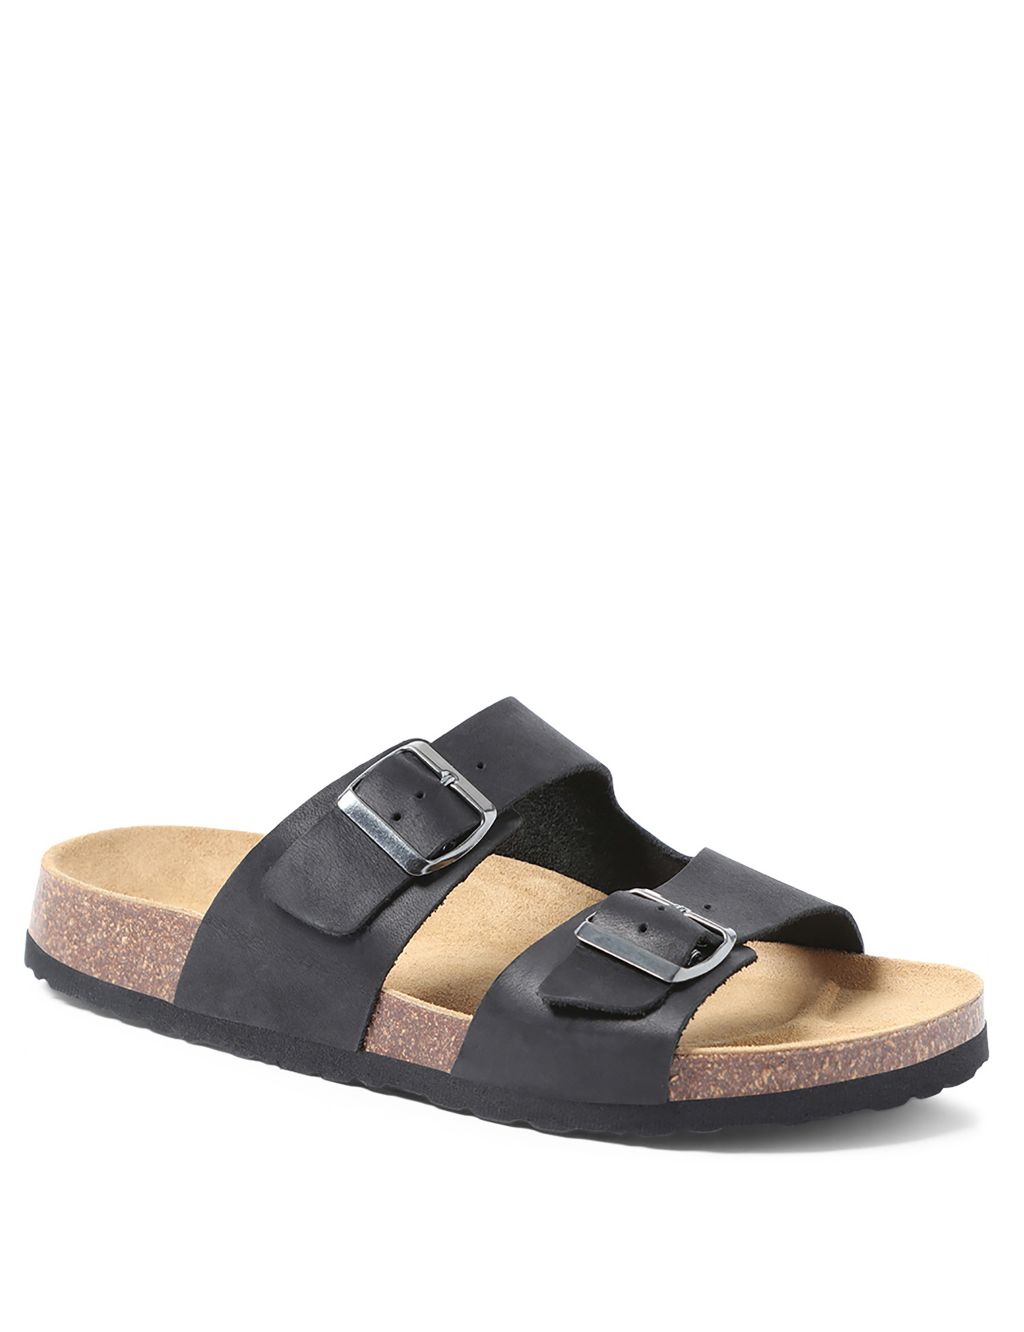 Leather Slip-On Sandals image 2